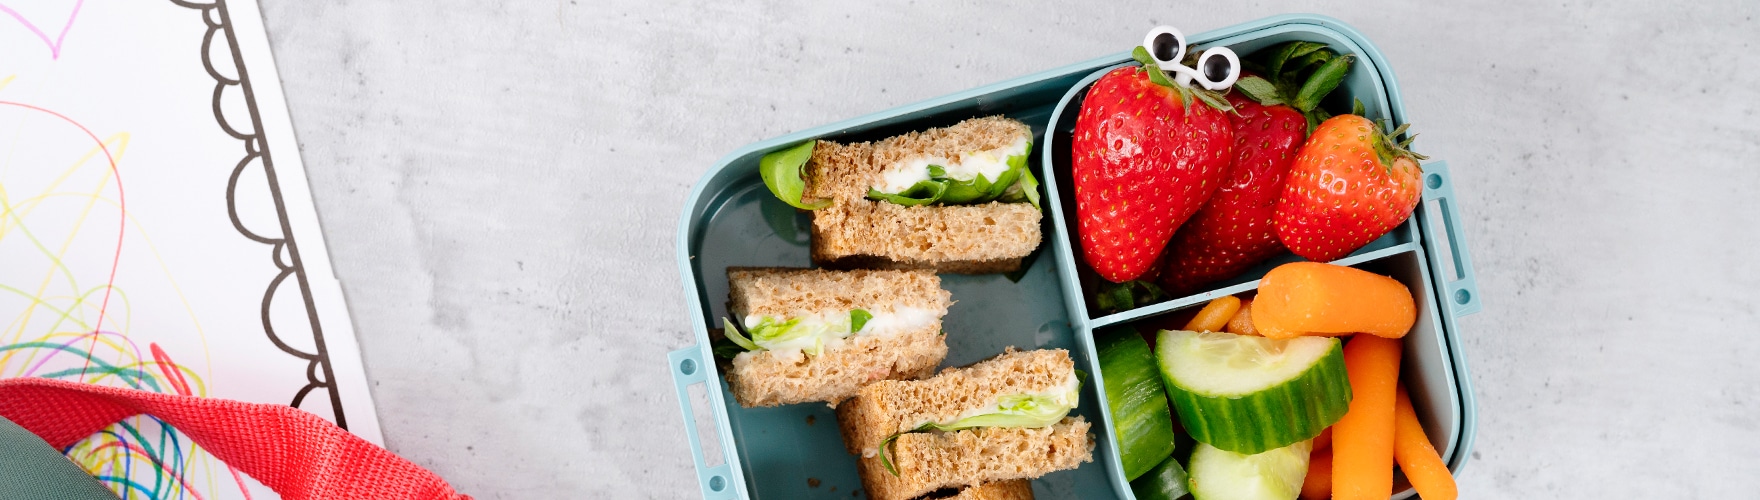 Kids lunchbox met aardbeien, komkommer, wortel en een boterham met smeerkaas